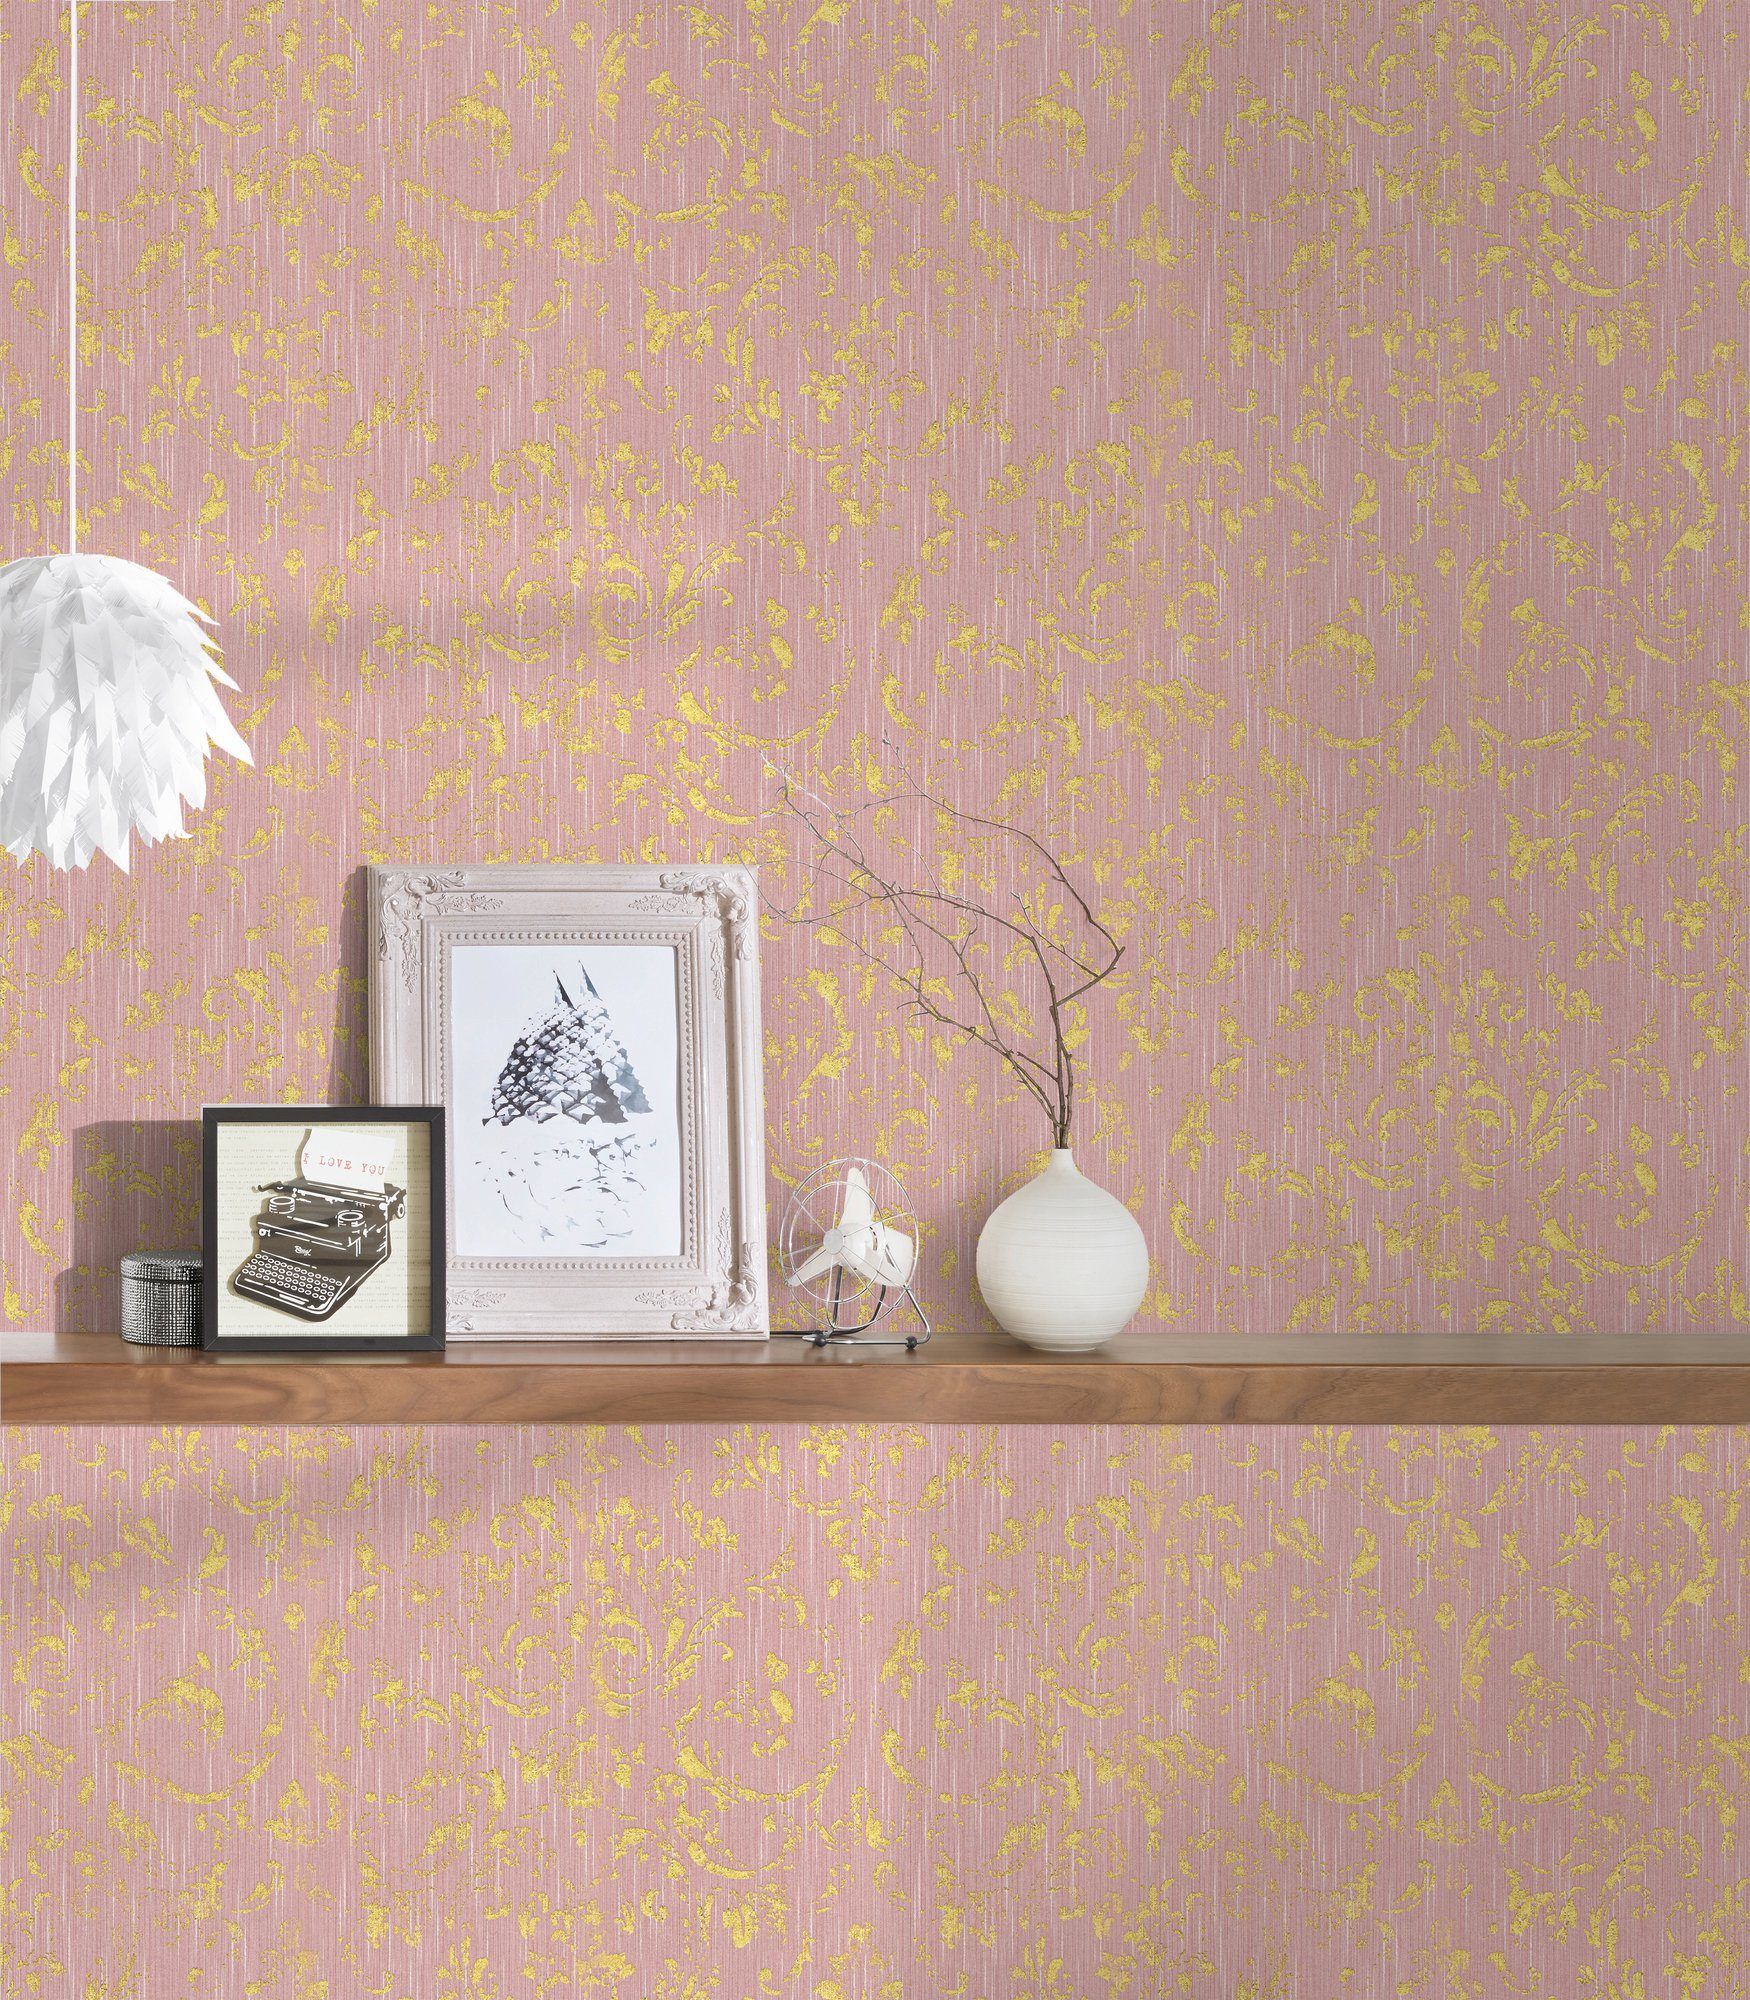 Tapete Metallic A.S. matt, glänzend, Barock, Ornament Paper Création Architects rosa/gold Silk, Barock Textiltapete samtig,